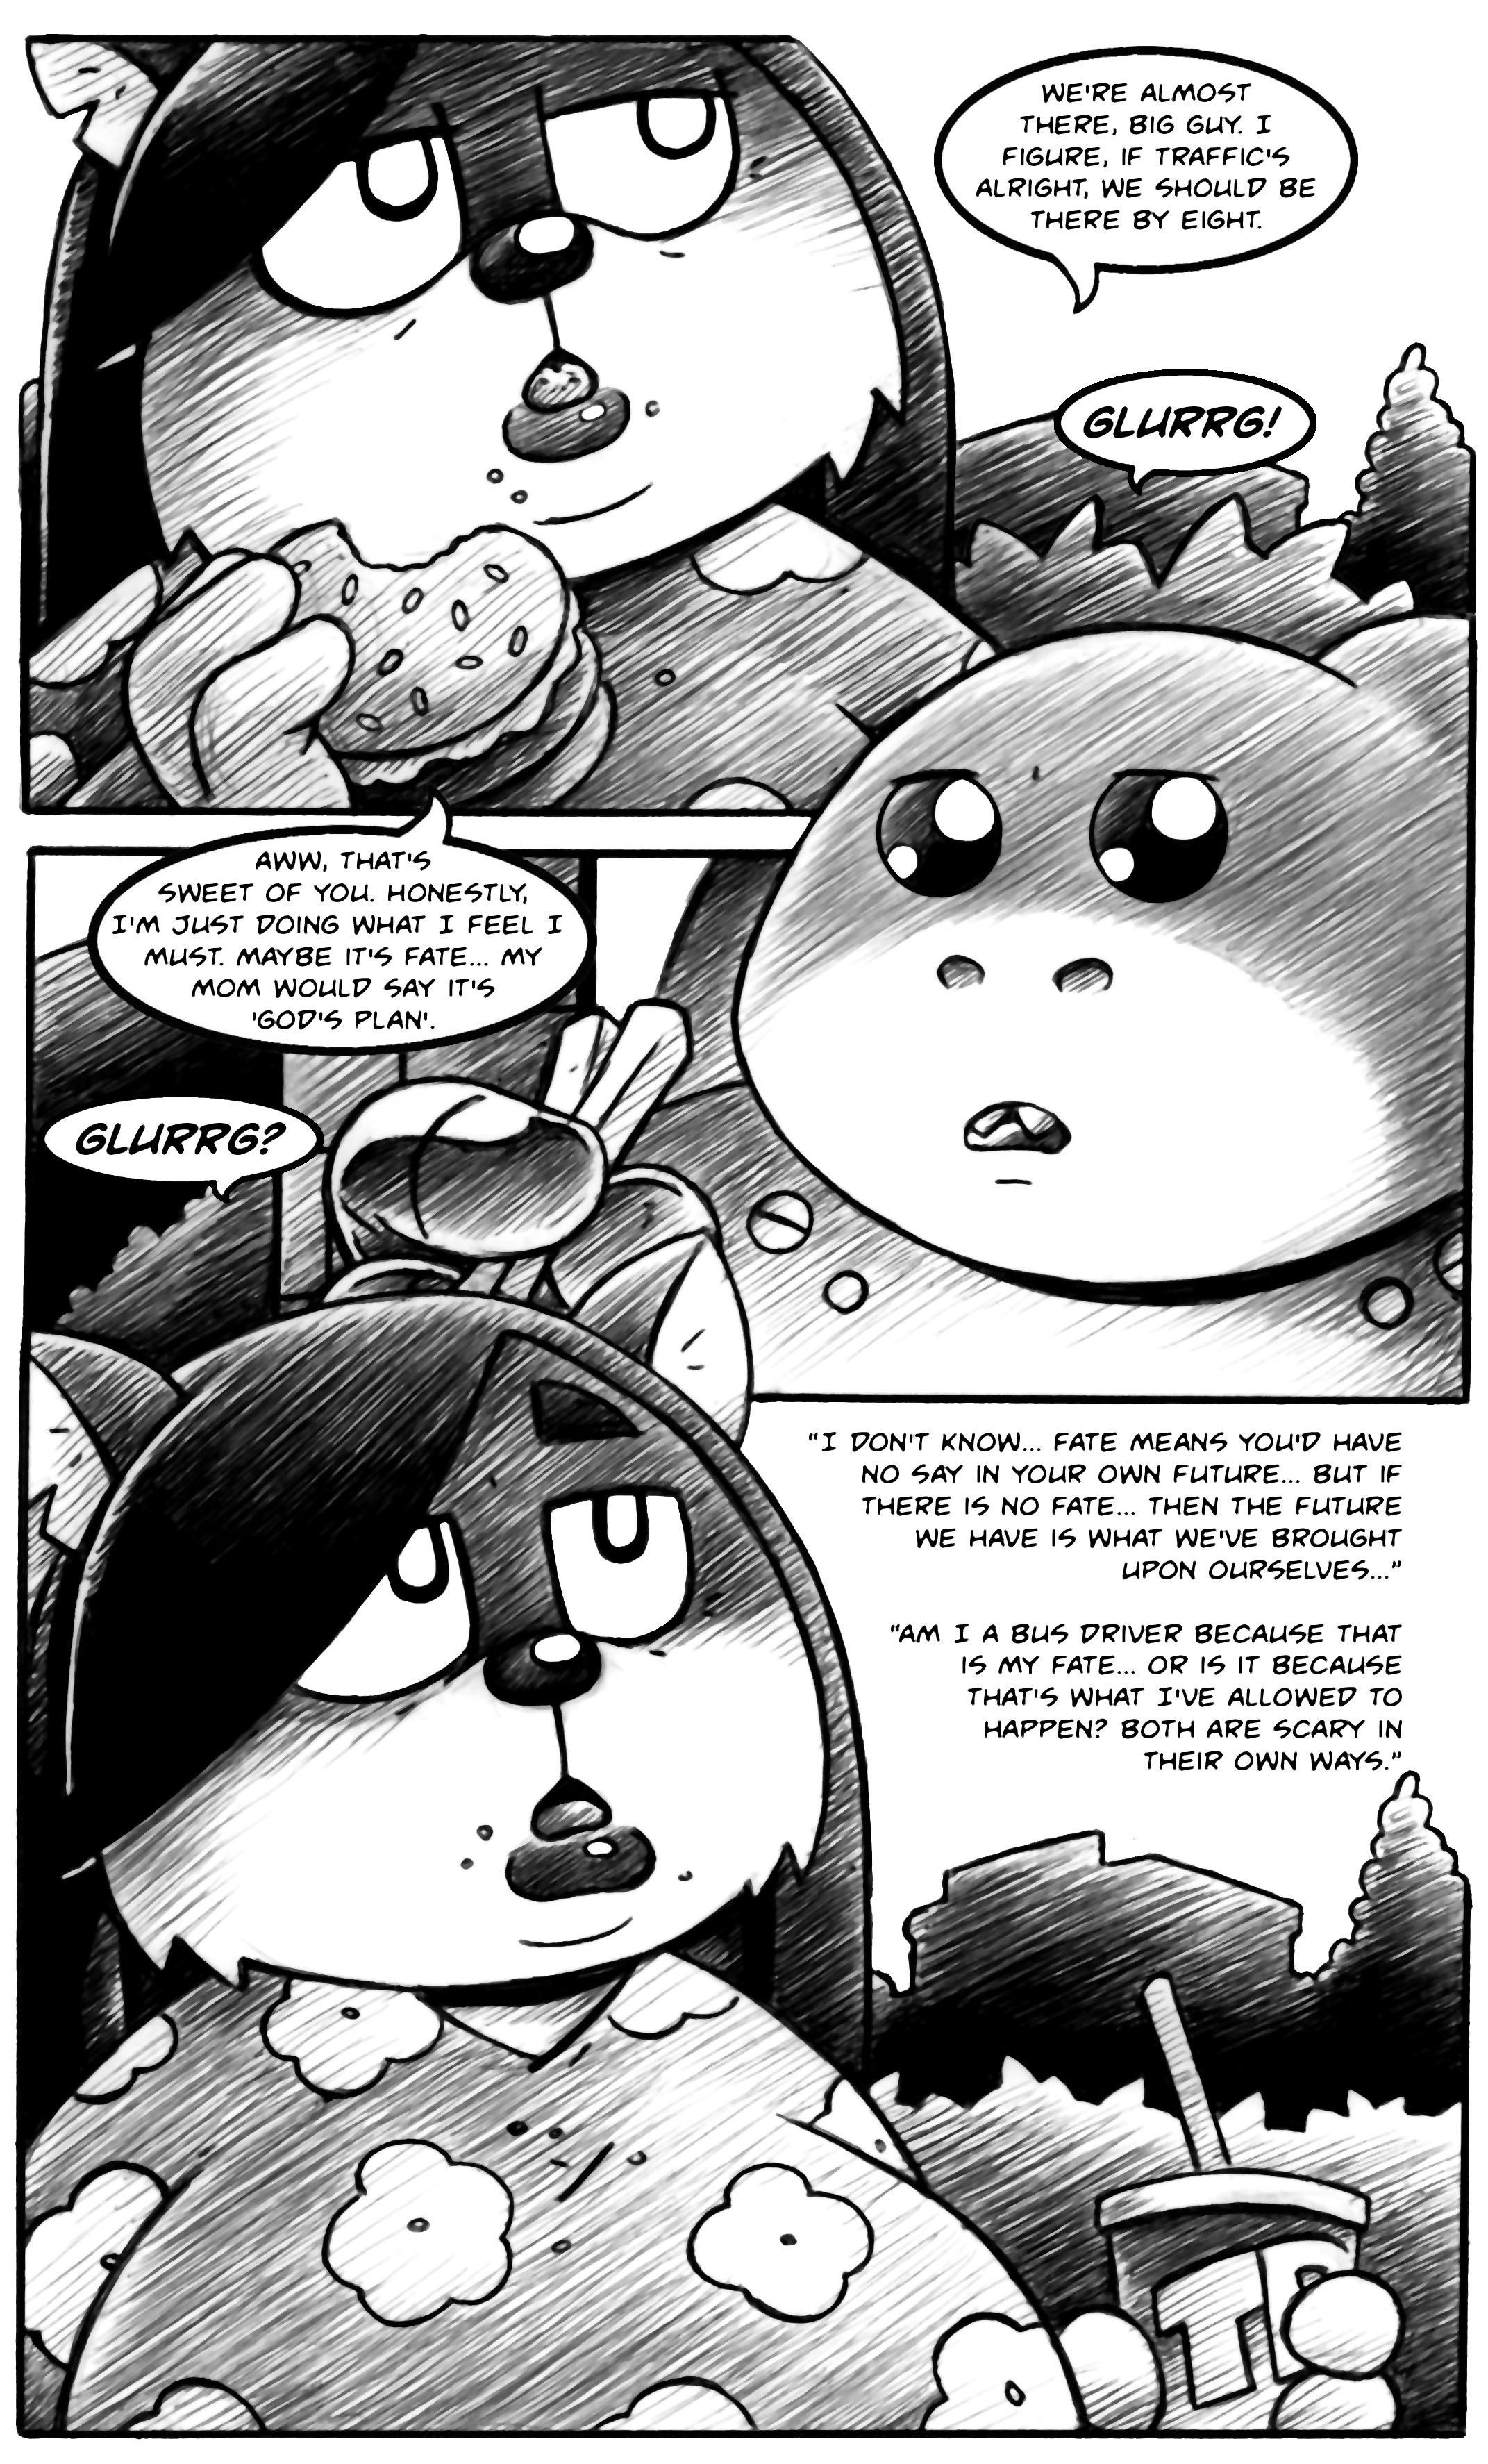 Wayfarer Rendezvous: Page 43